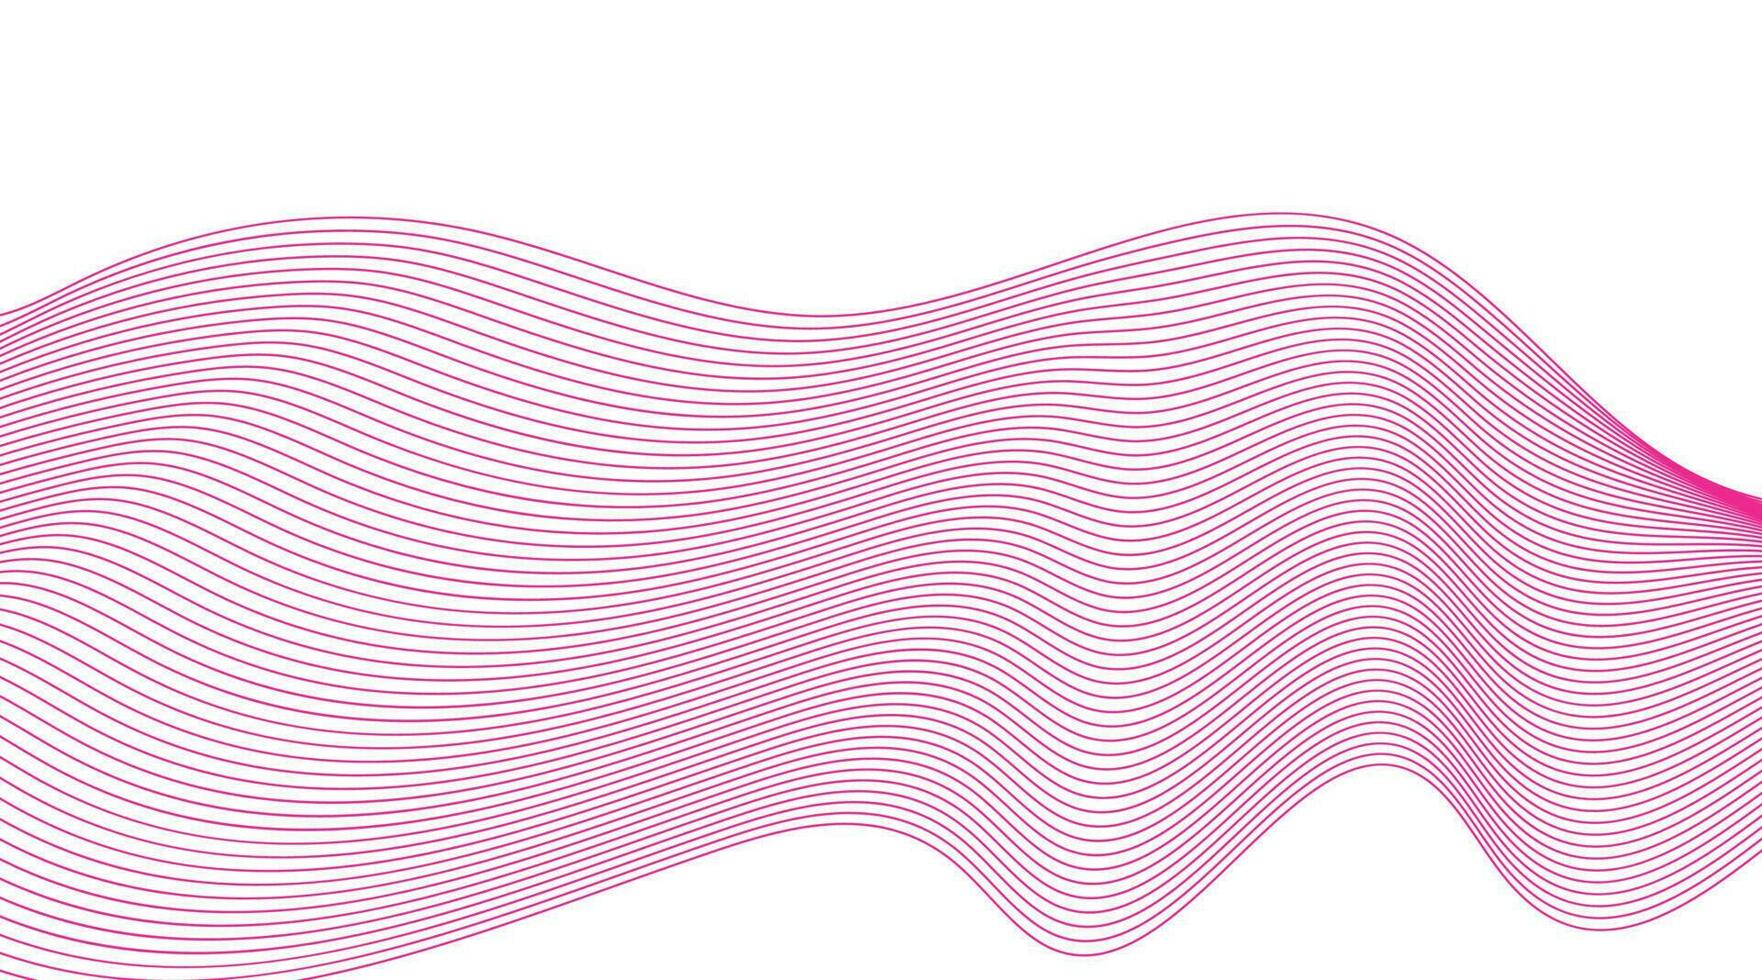 abstrato ondulado fundo. fino linha ondulado abstrato vetor fundo. curva onda desatado padronizar. linha arte listrado gráfico modelo